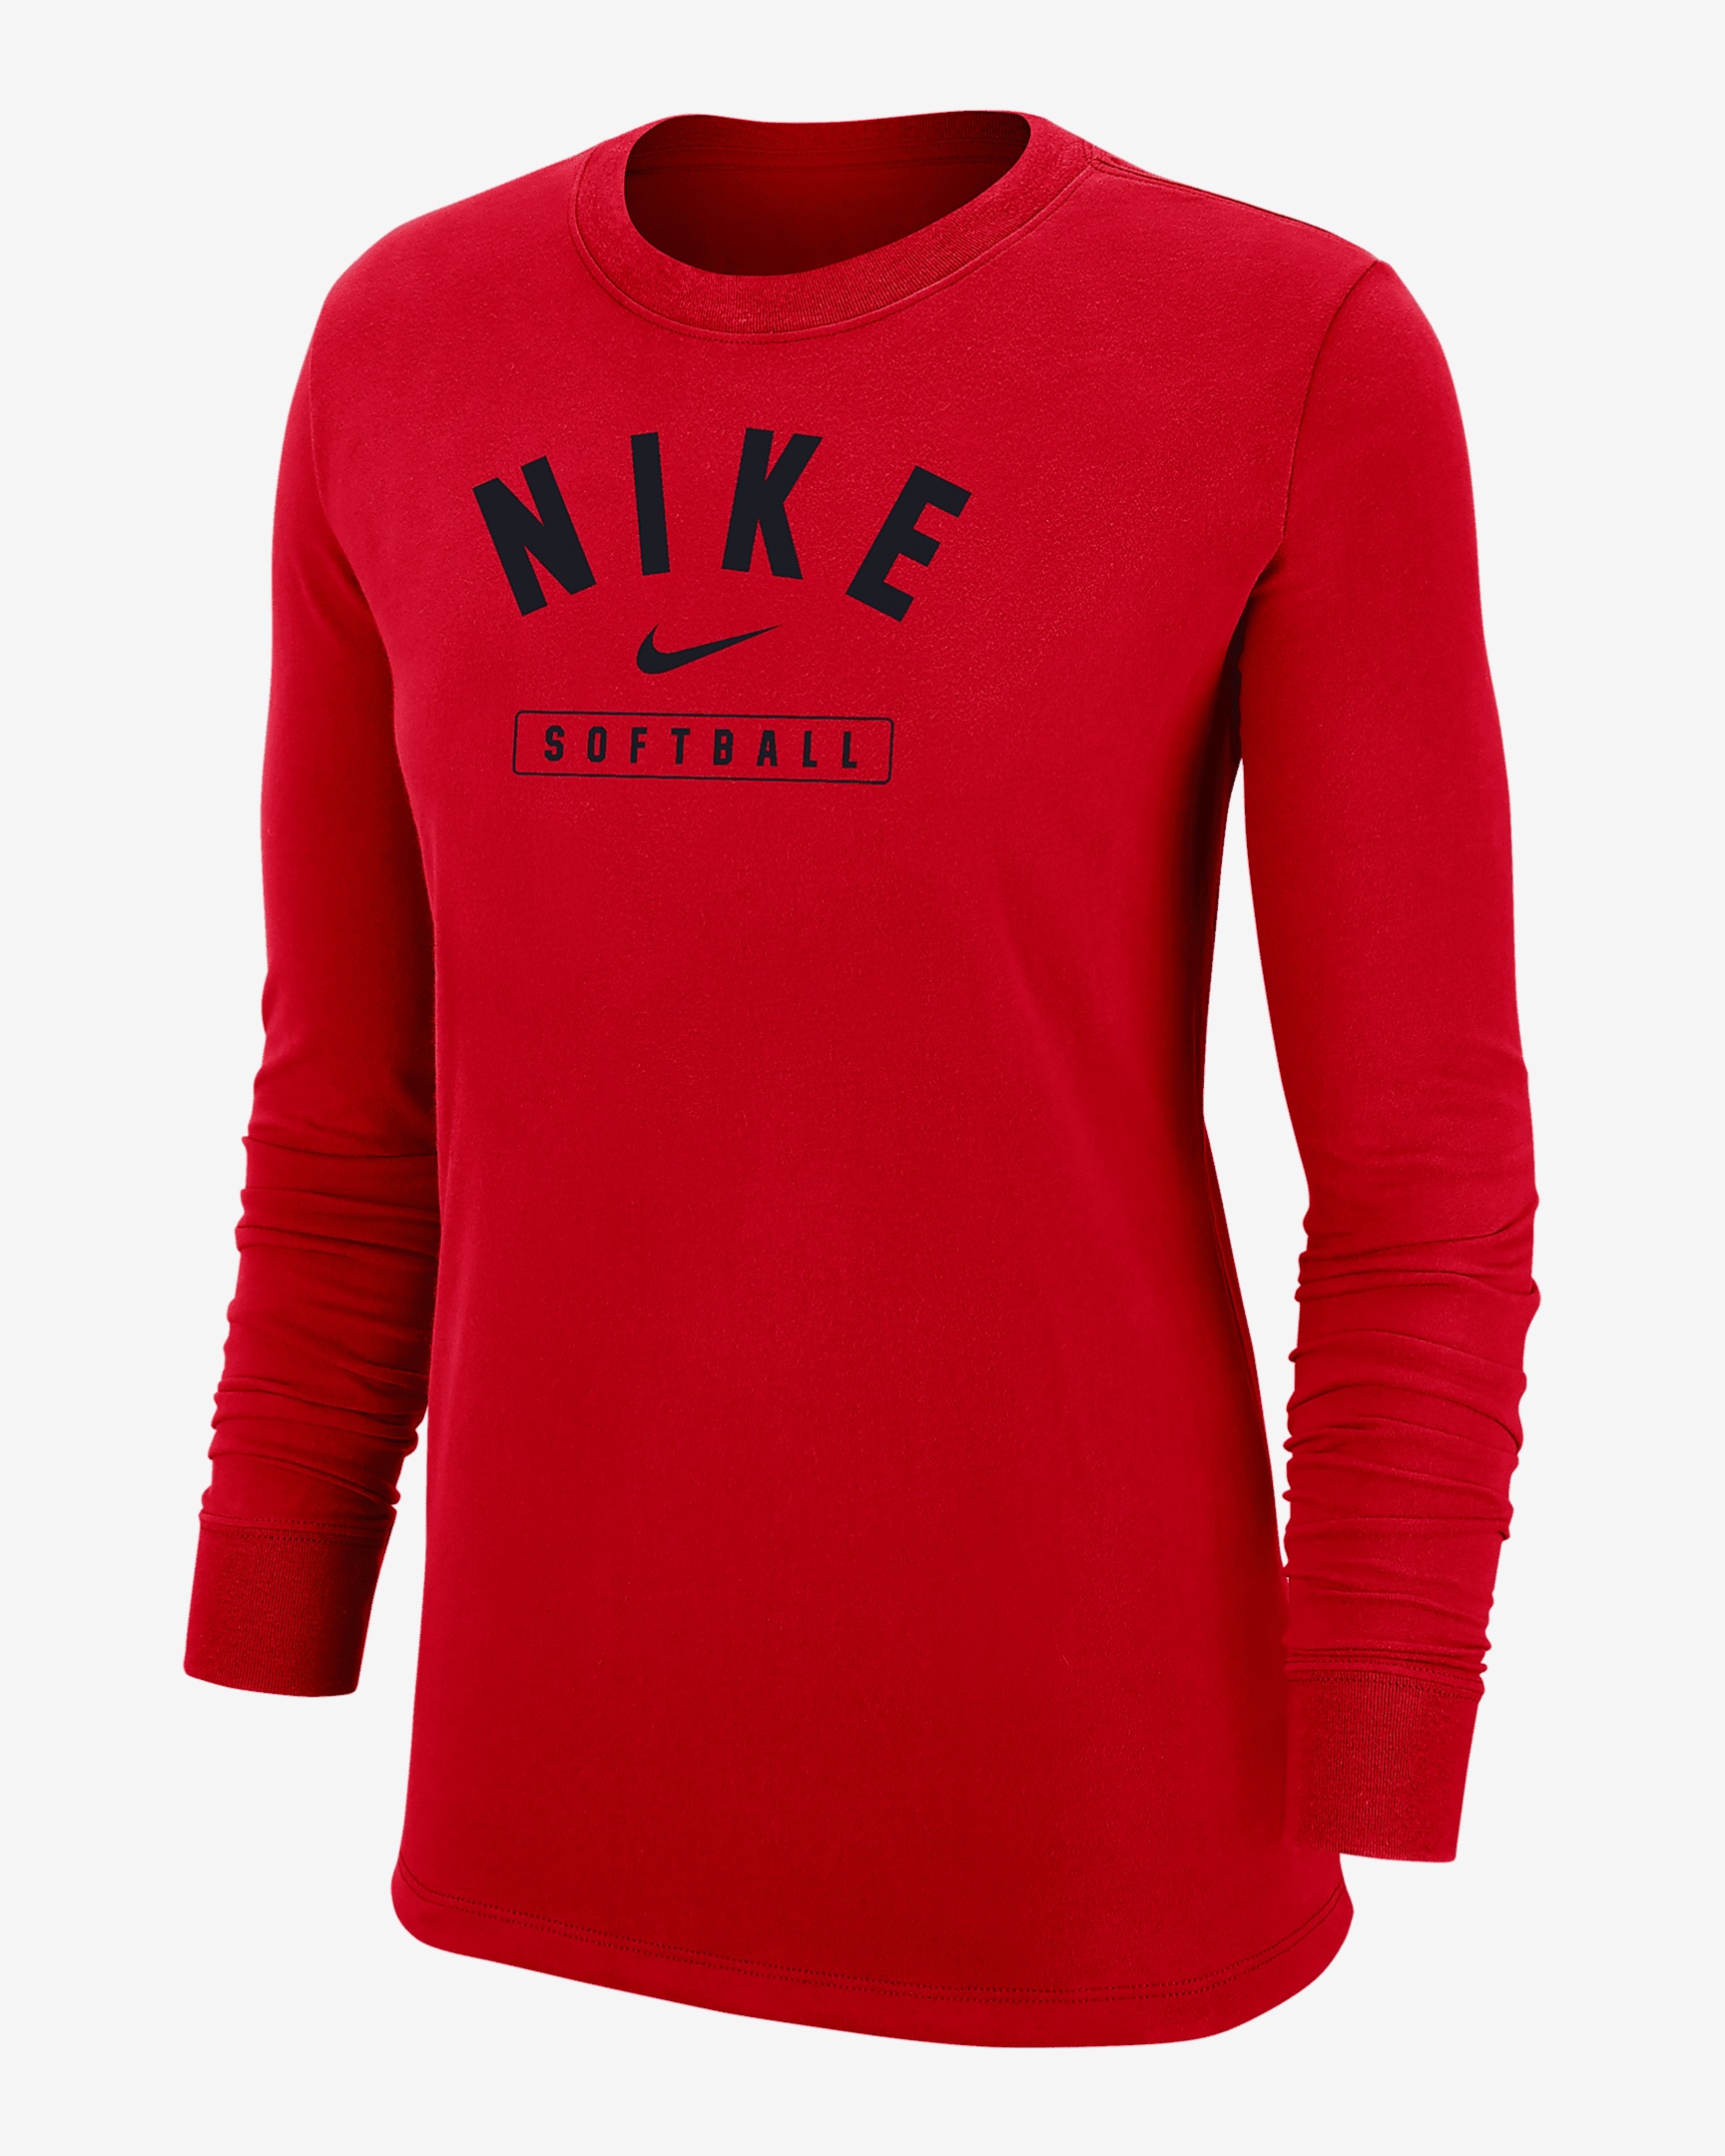 Nike Women's Softball Long-Sleeve T-Shirt - 1